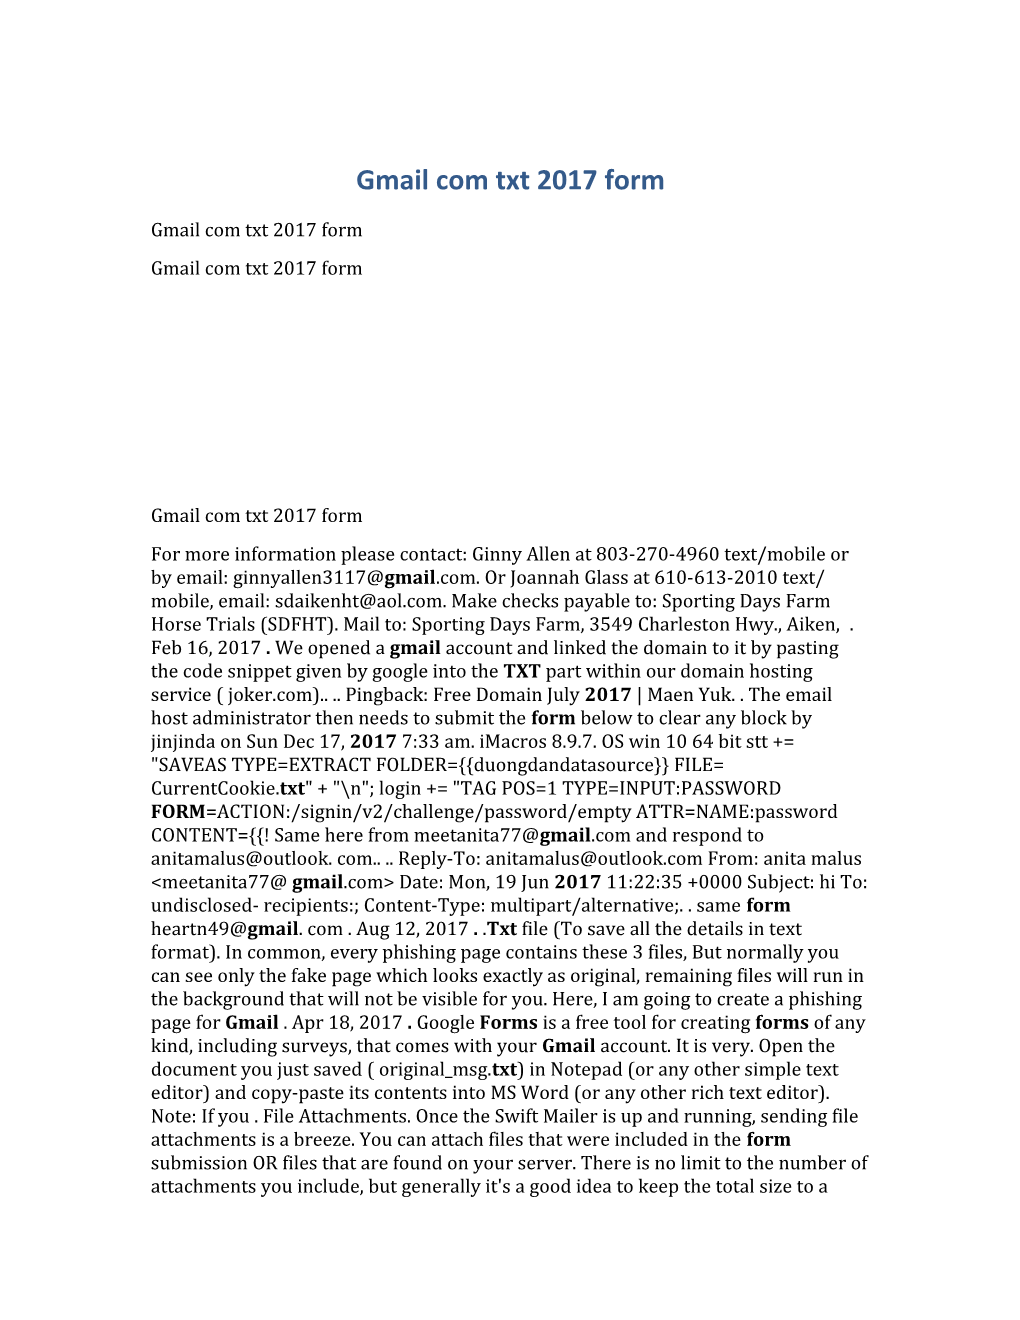 Gmail Com Txt 2017 Form